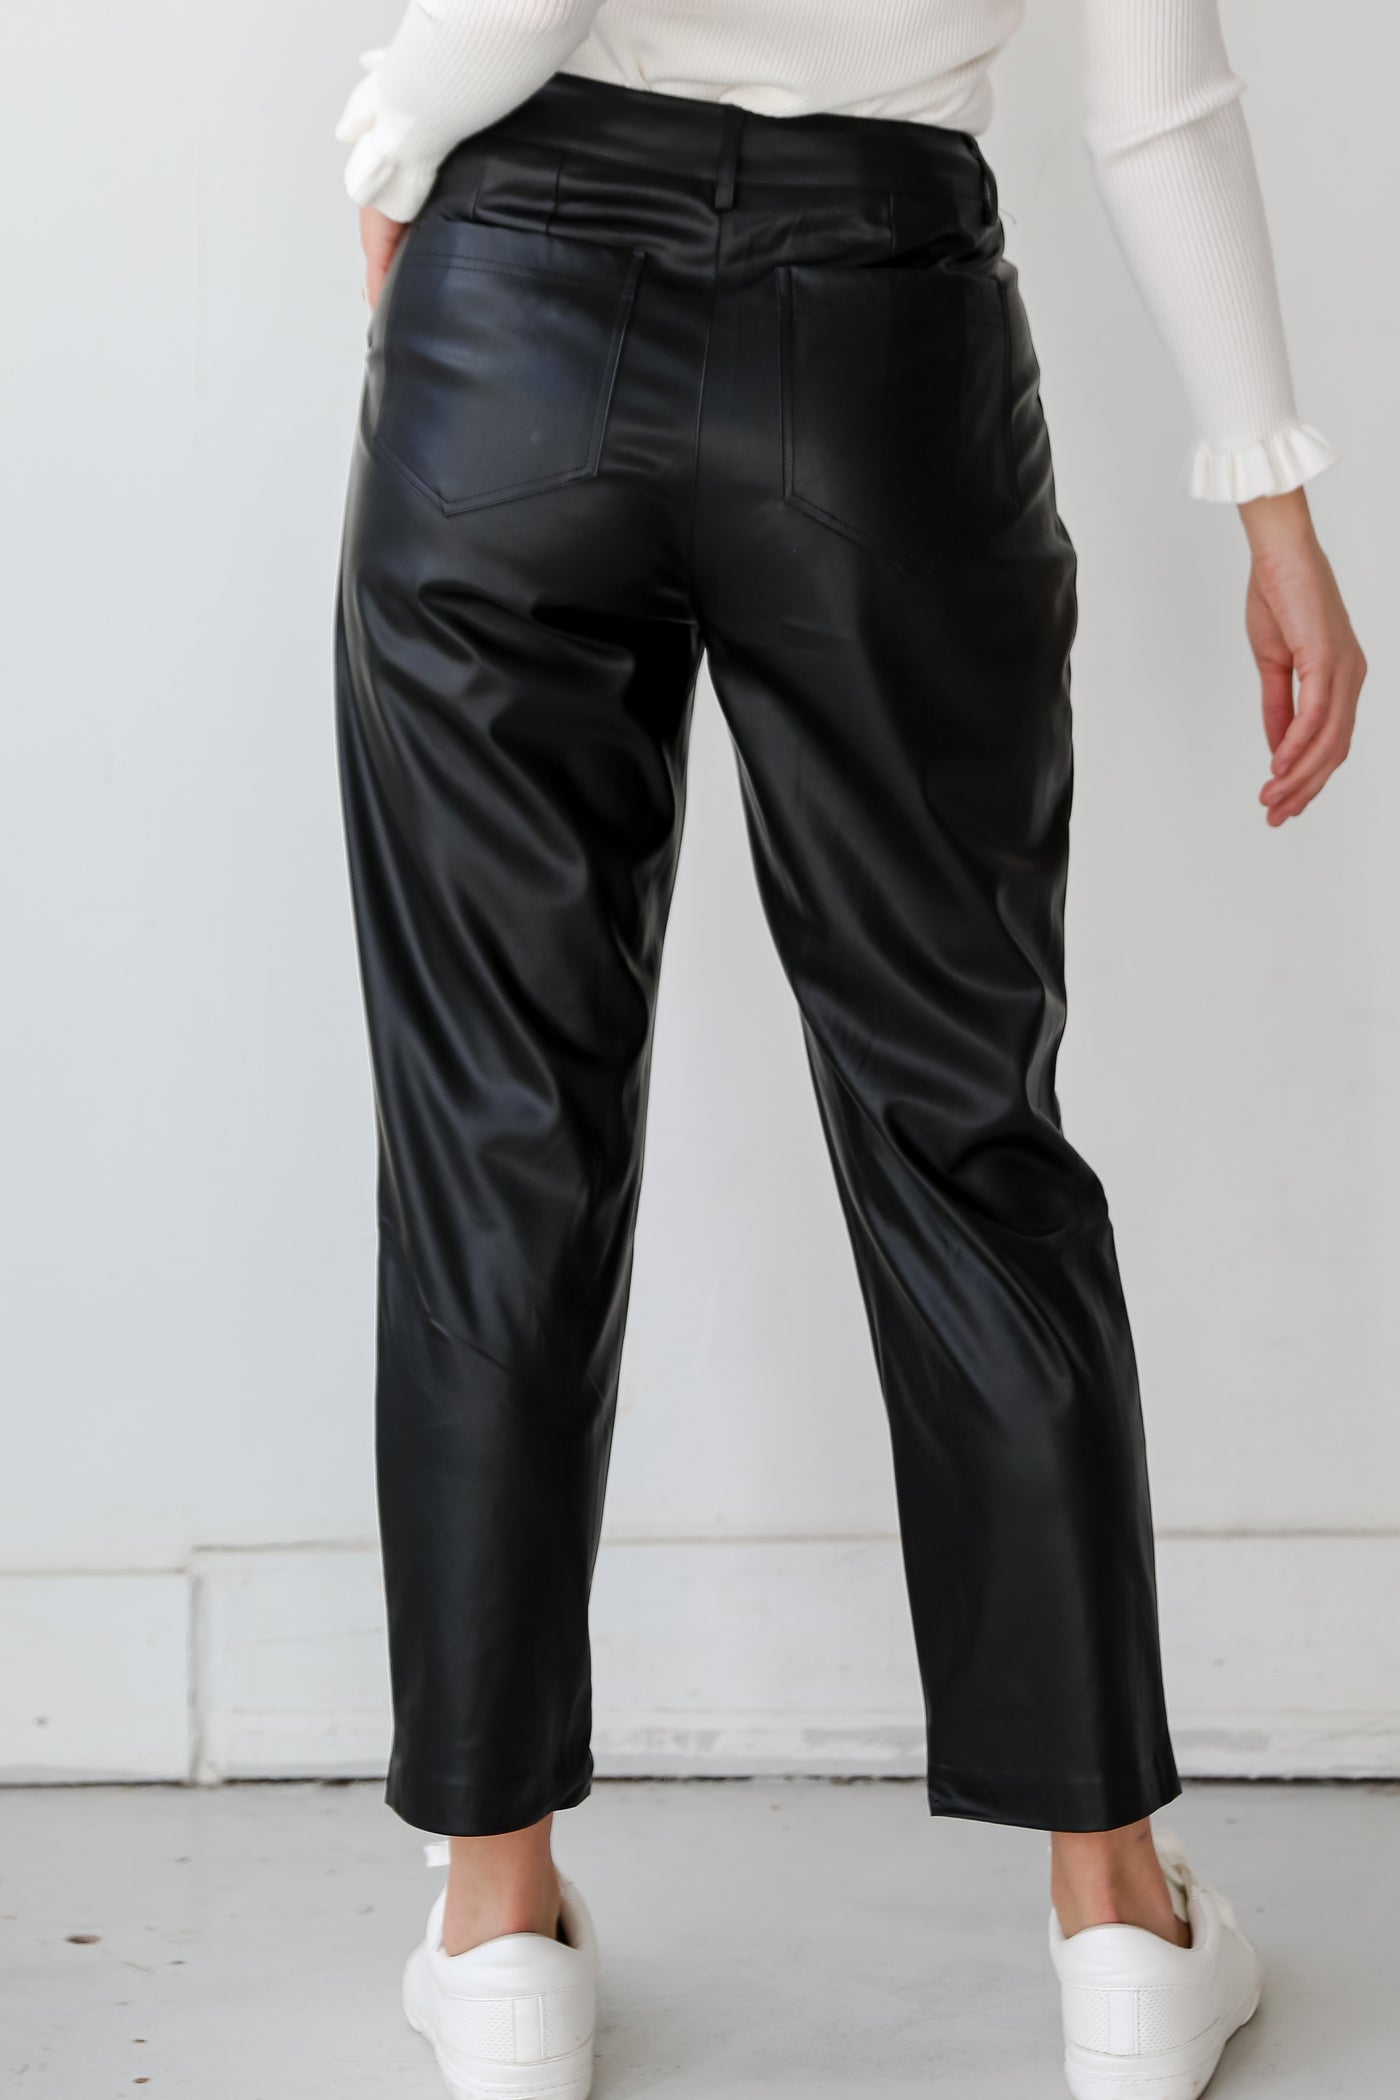 chic Black Leather Pants